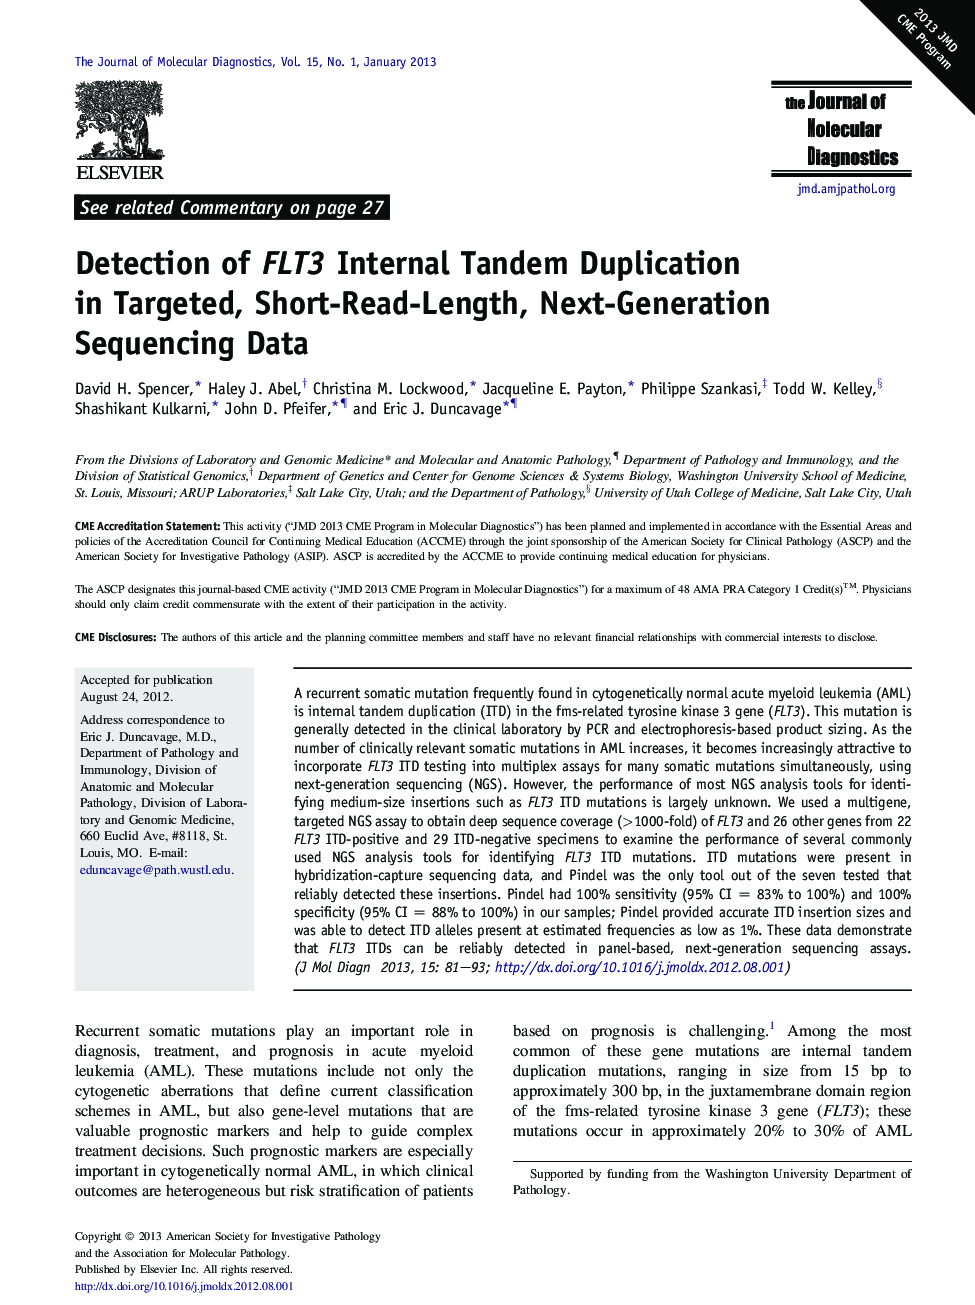 Regular articleDetection of FLT3 Internal Tandem Duplication in Targeted, Short-Read-Length, Next-Generation Sequencing Data